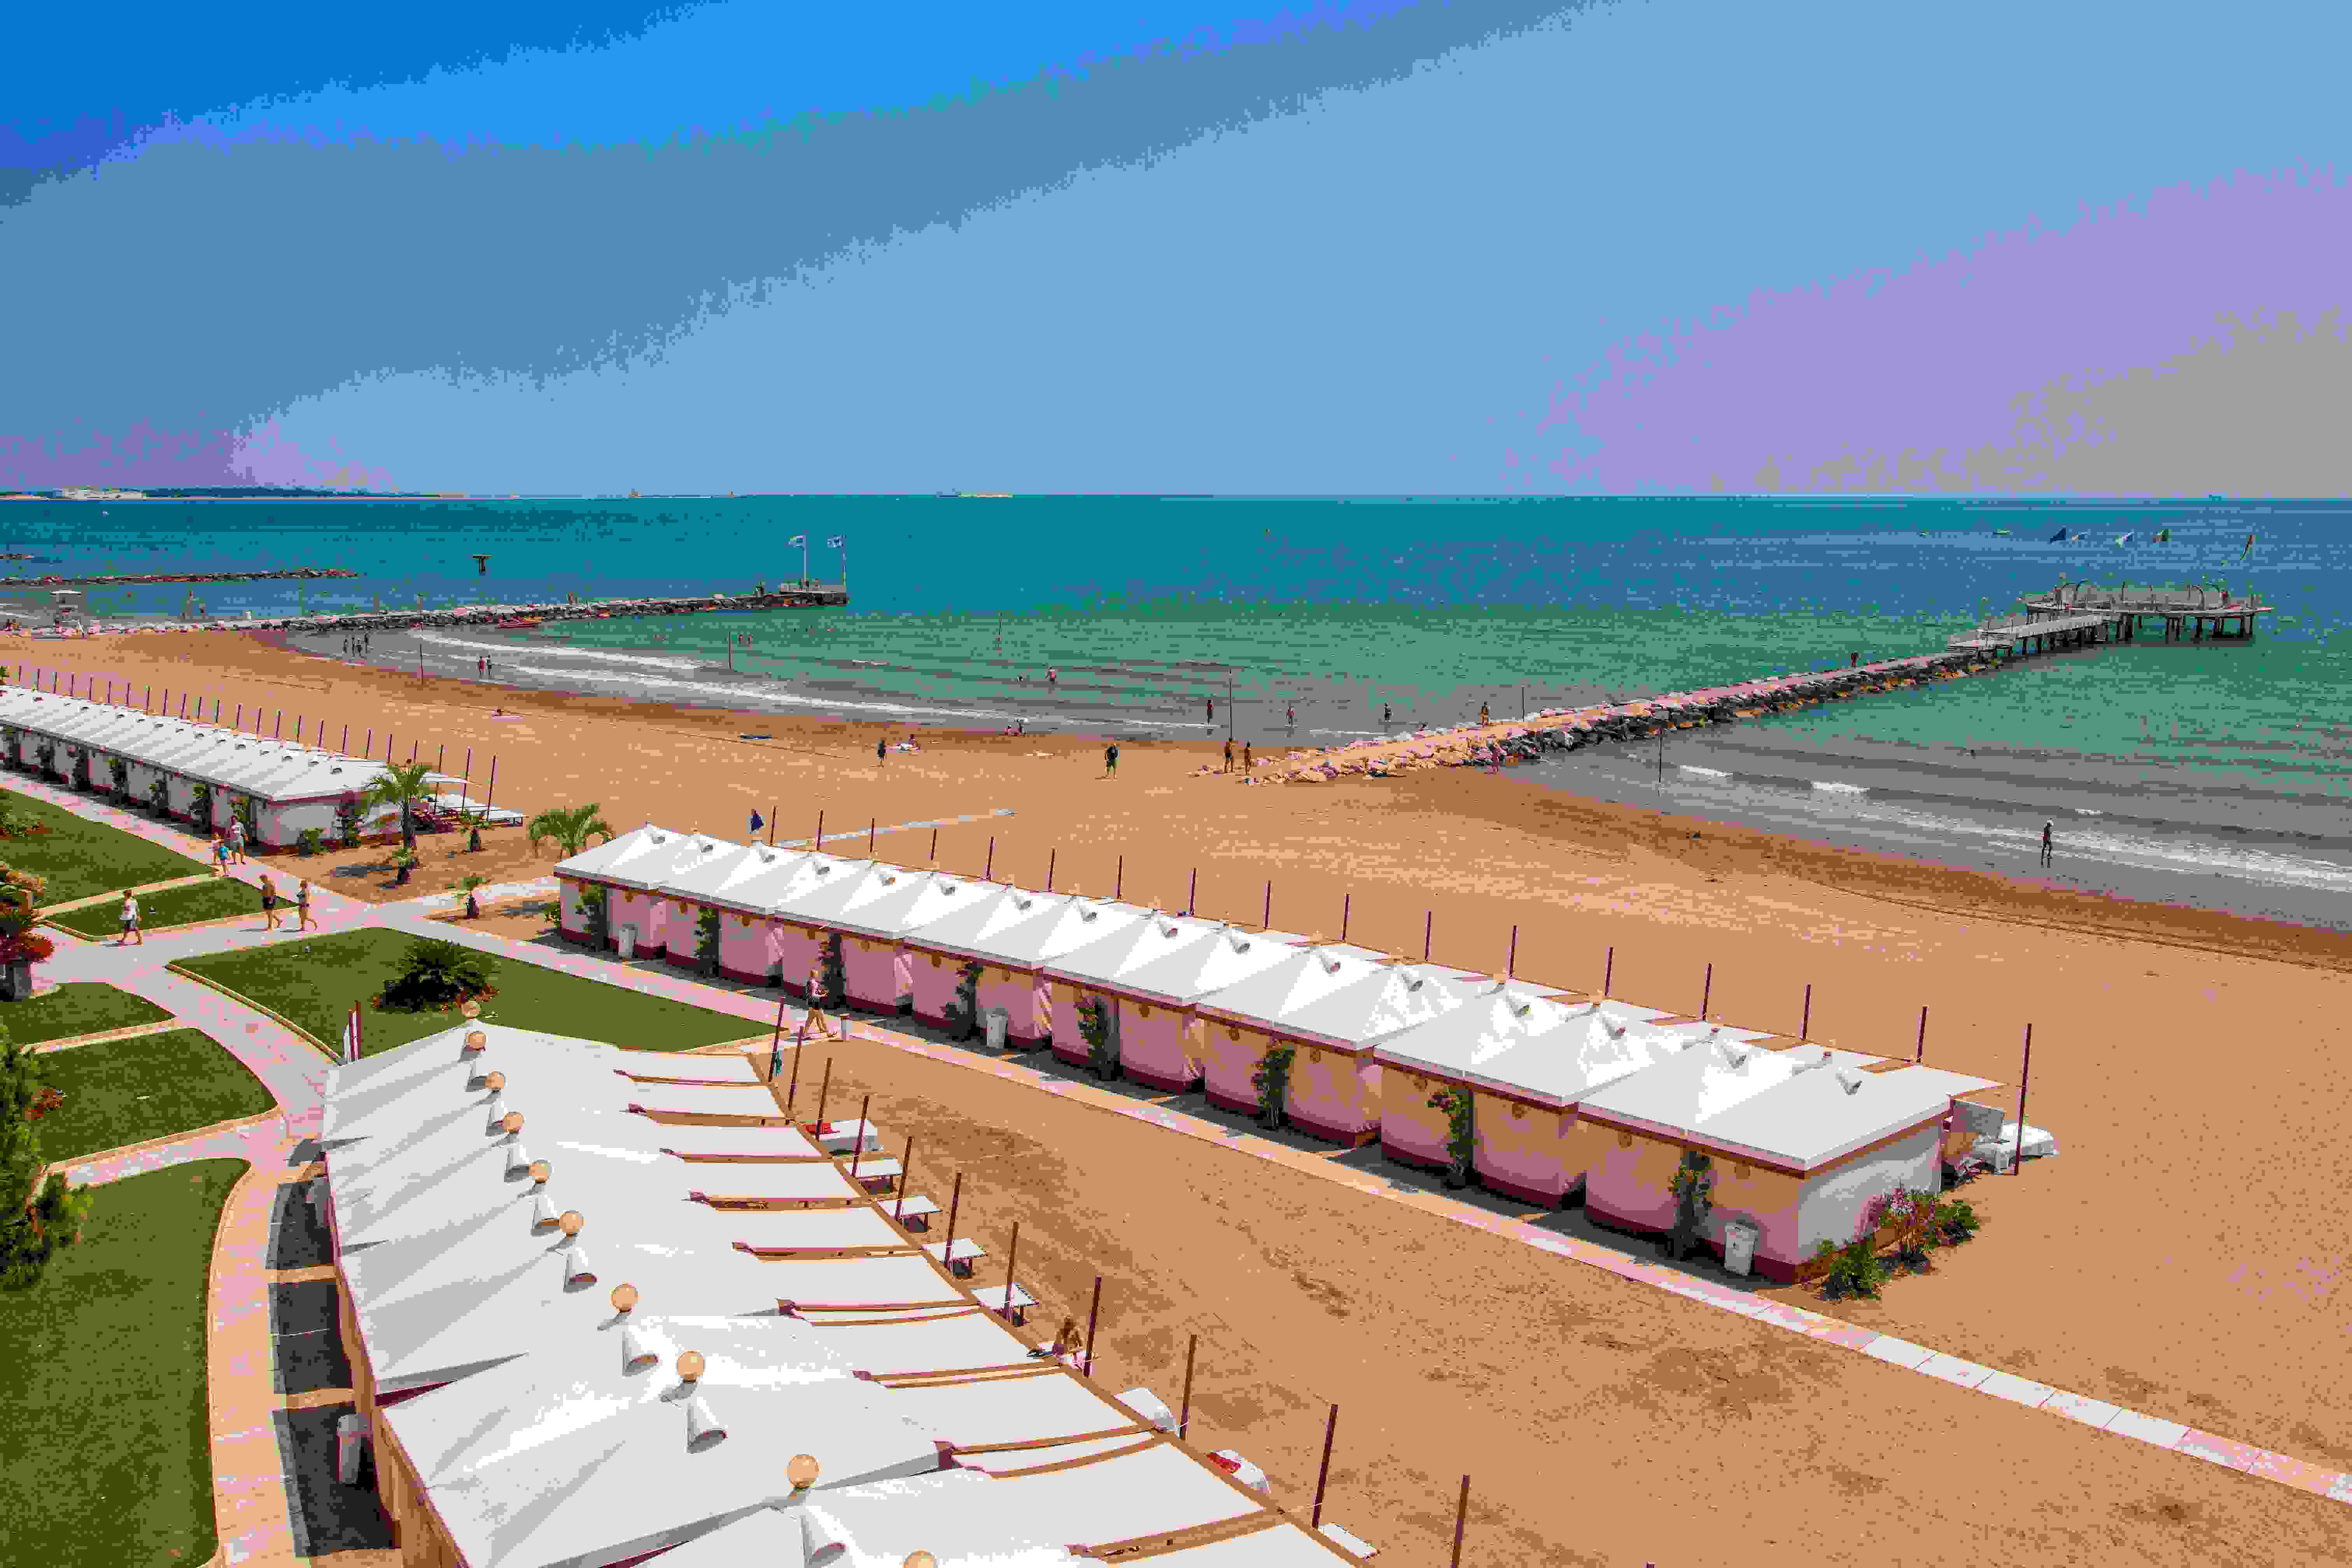 Beach at Venice Lido, Italy, Hotel Excelsior Venice Lido Resort